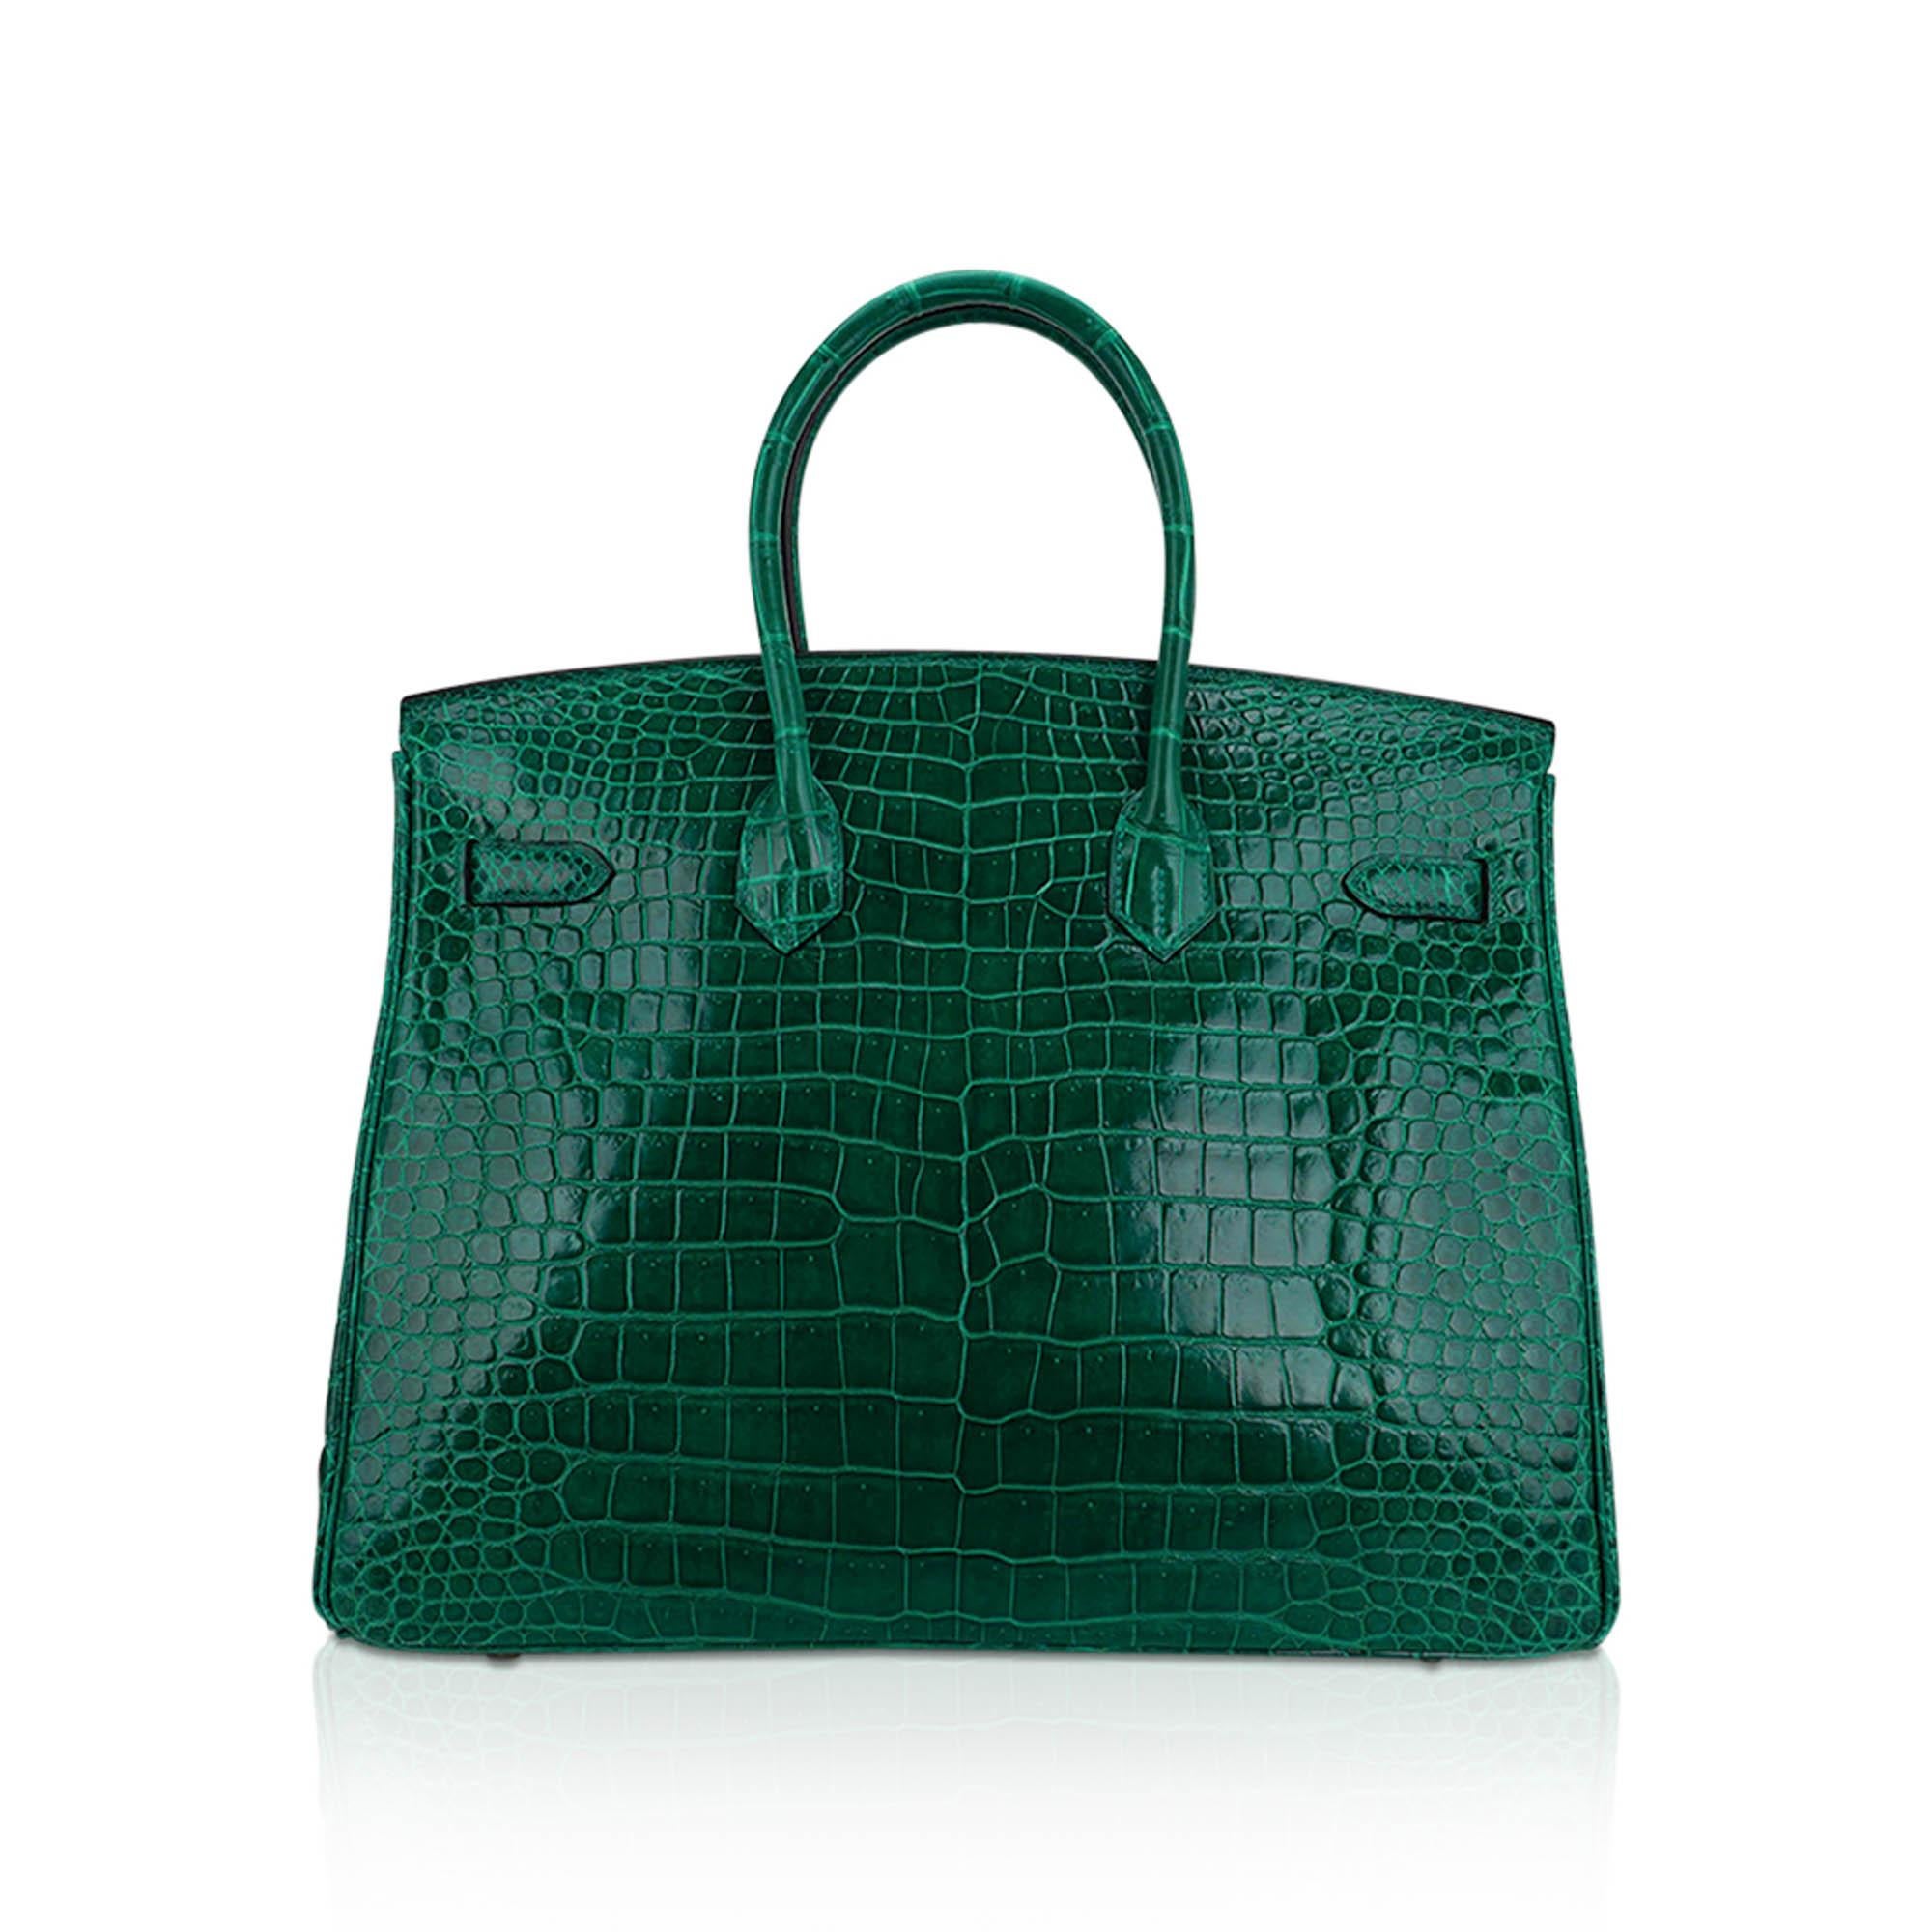 Blue Hermes Birkin 35 Bag Emerald Porosus Crocodile Palladium Hardware